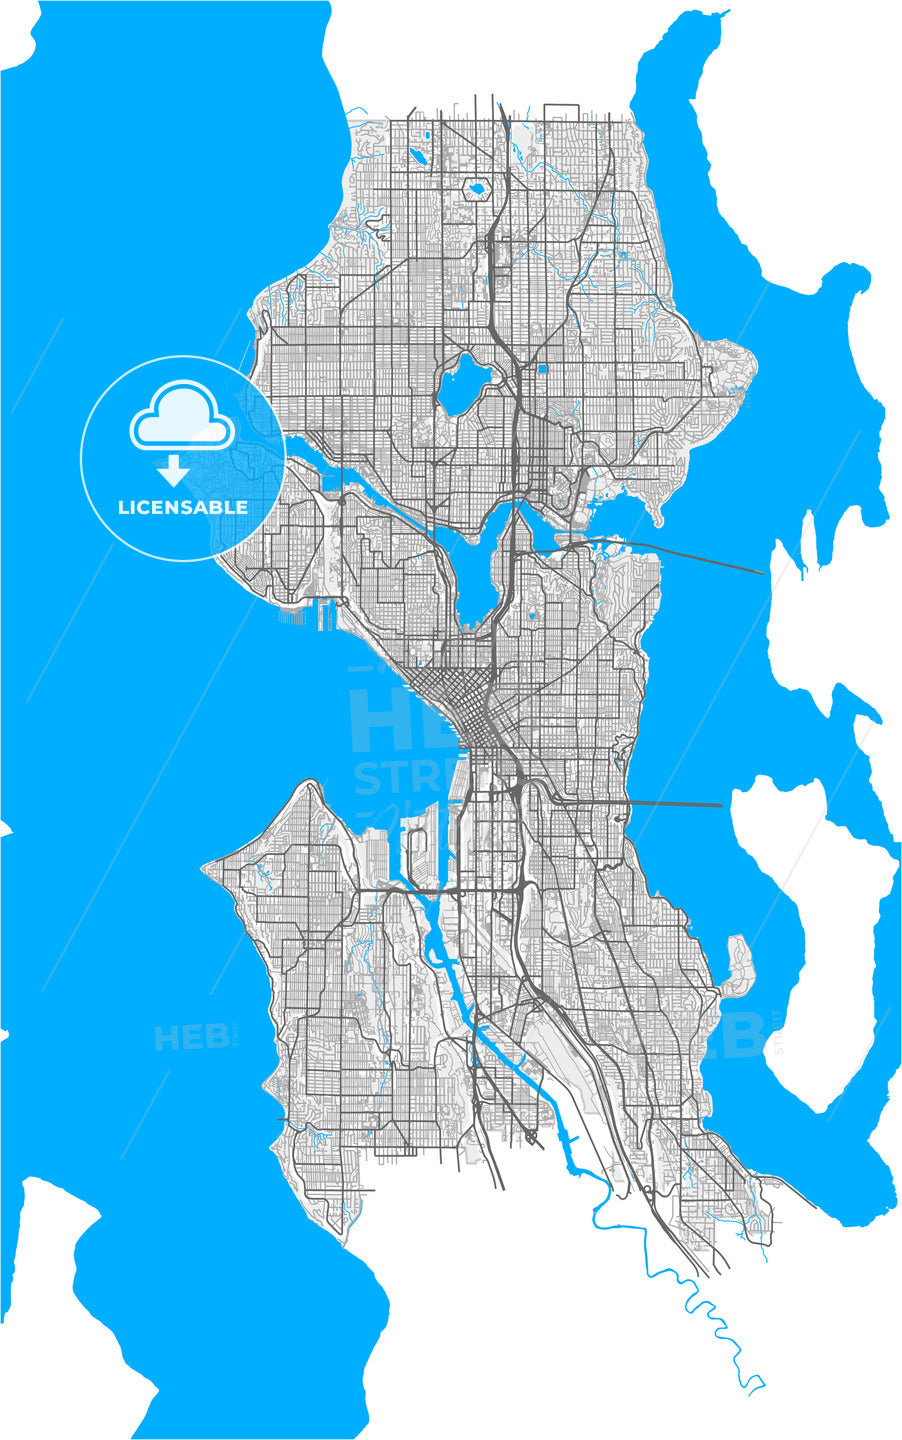 Seattle, Washington, United States, high quality vector map